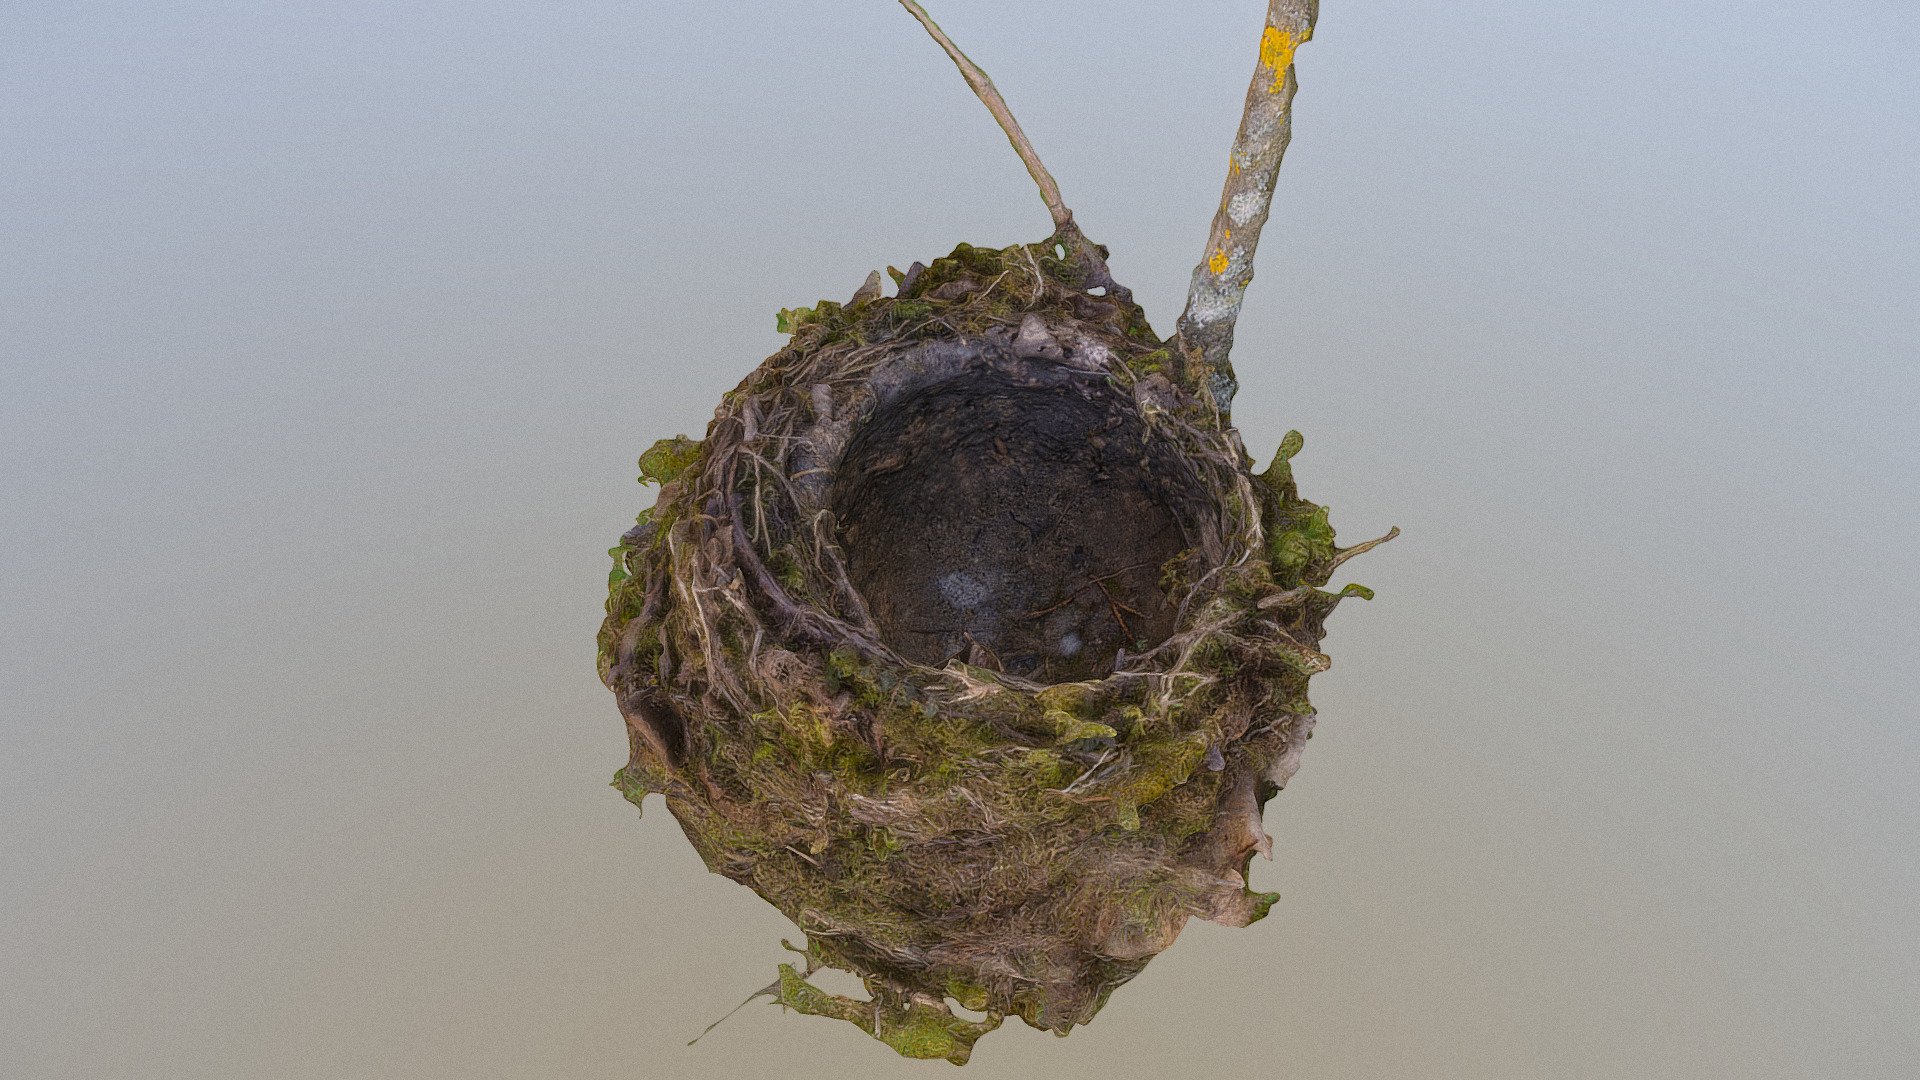 Natural bird bird's birds nest on tree bush forest brach, made of moss and straws

Photogrammetry scan 160x24MP, 3x16K texture - Bird nest - Buy Royalty Free 3D model by matousekfoto 3d model